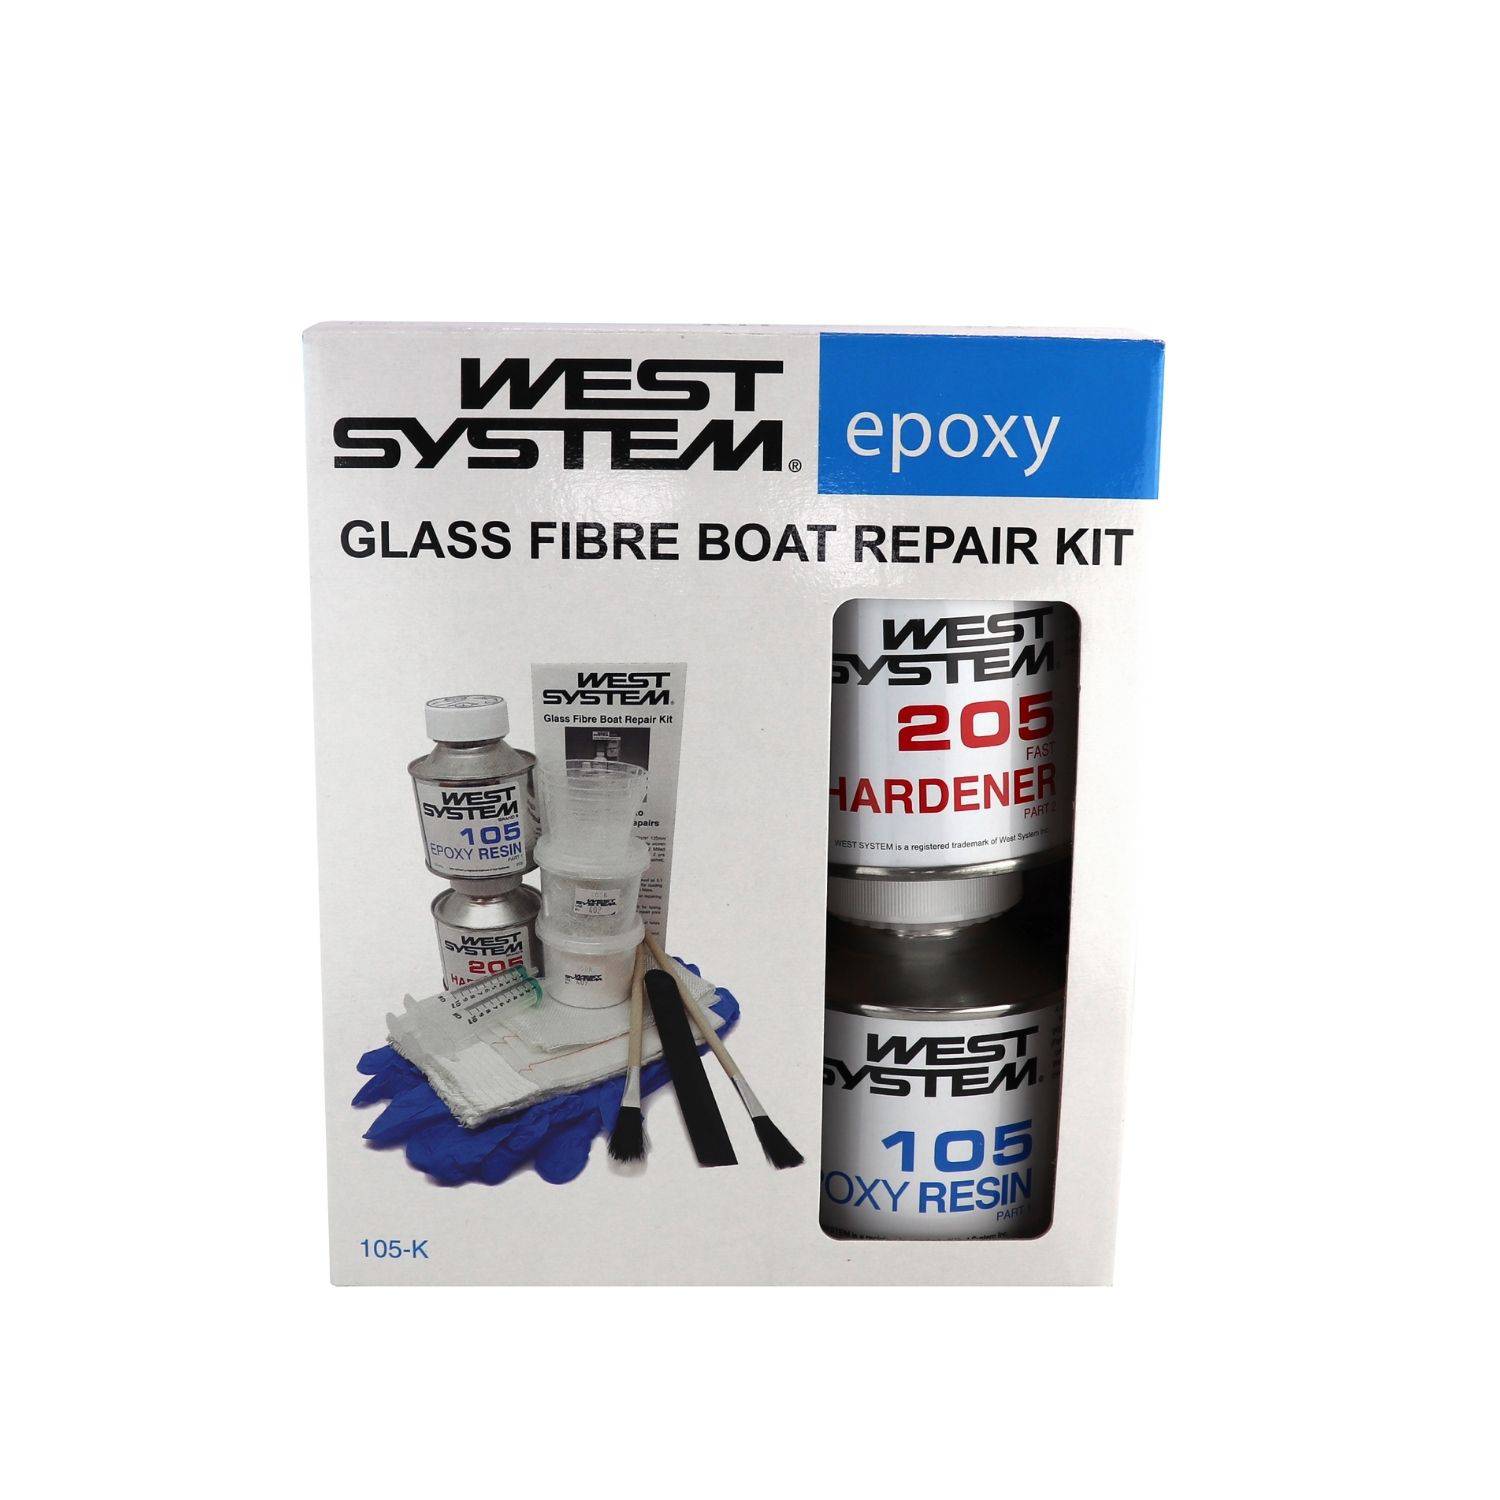 West system flass fibre boat repair kit